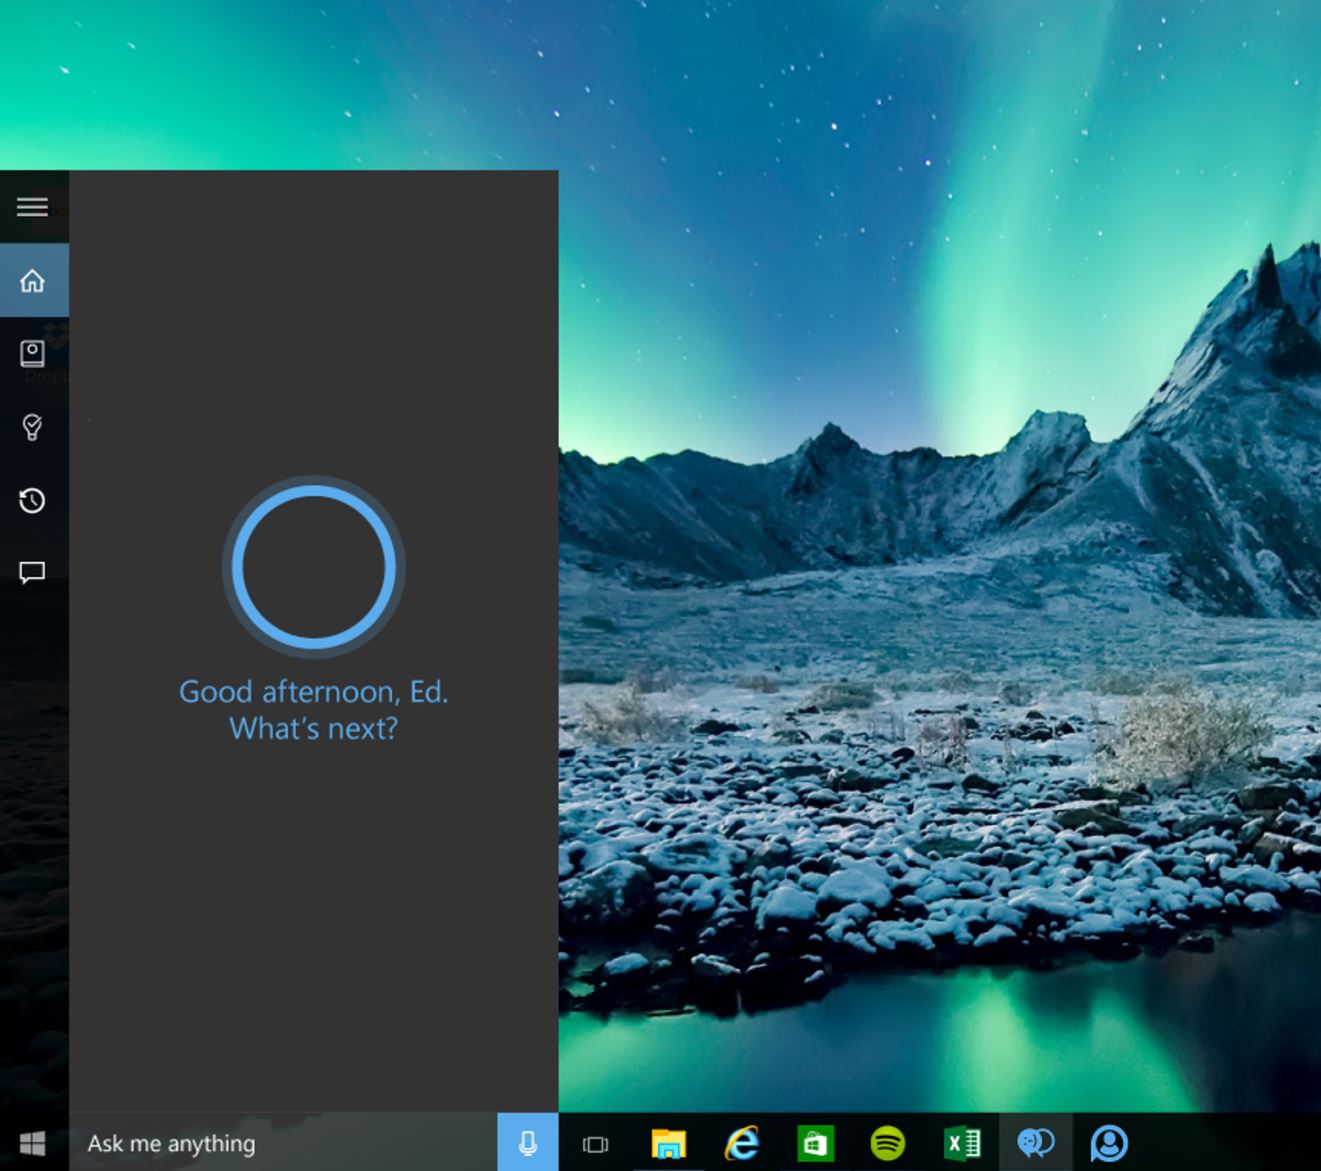 Cortana on Windows 10 for business users